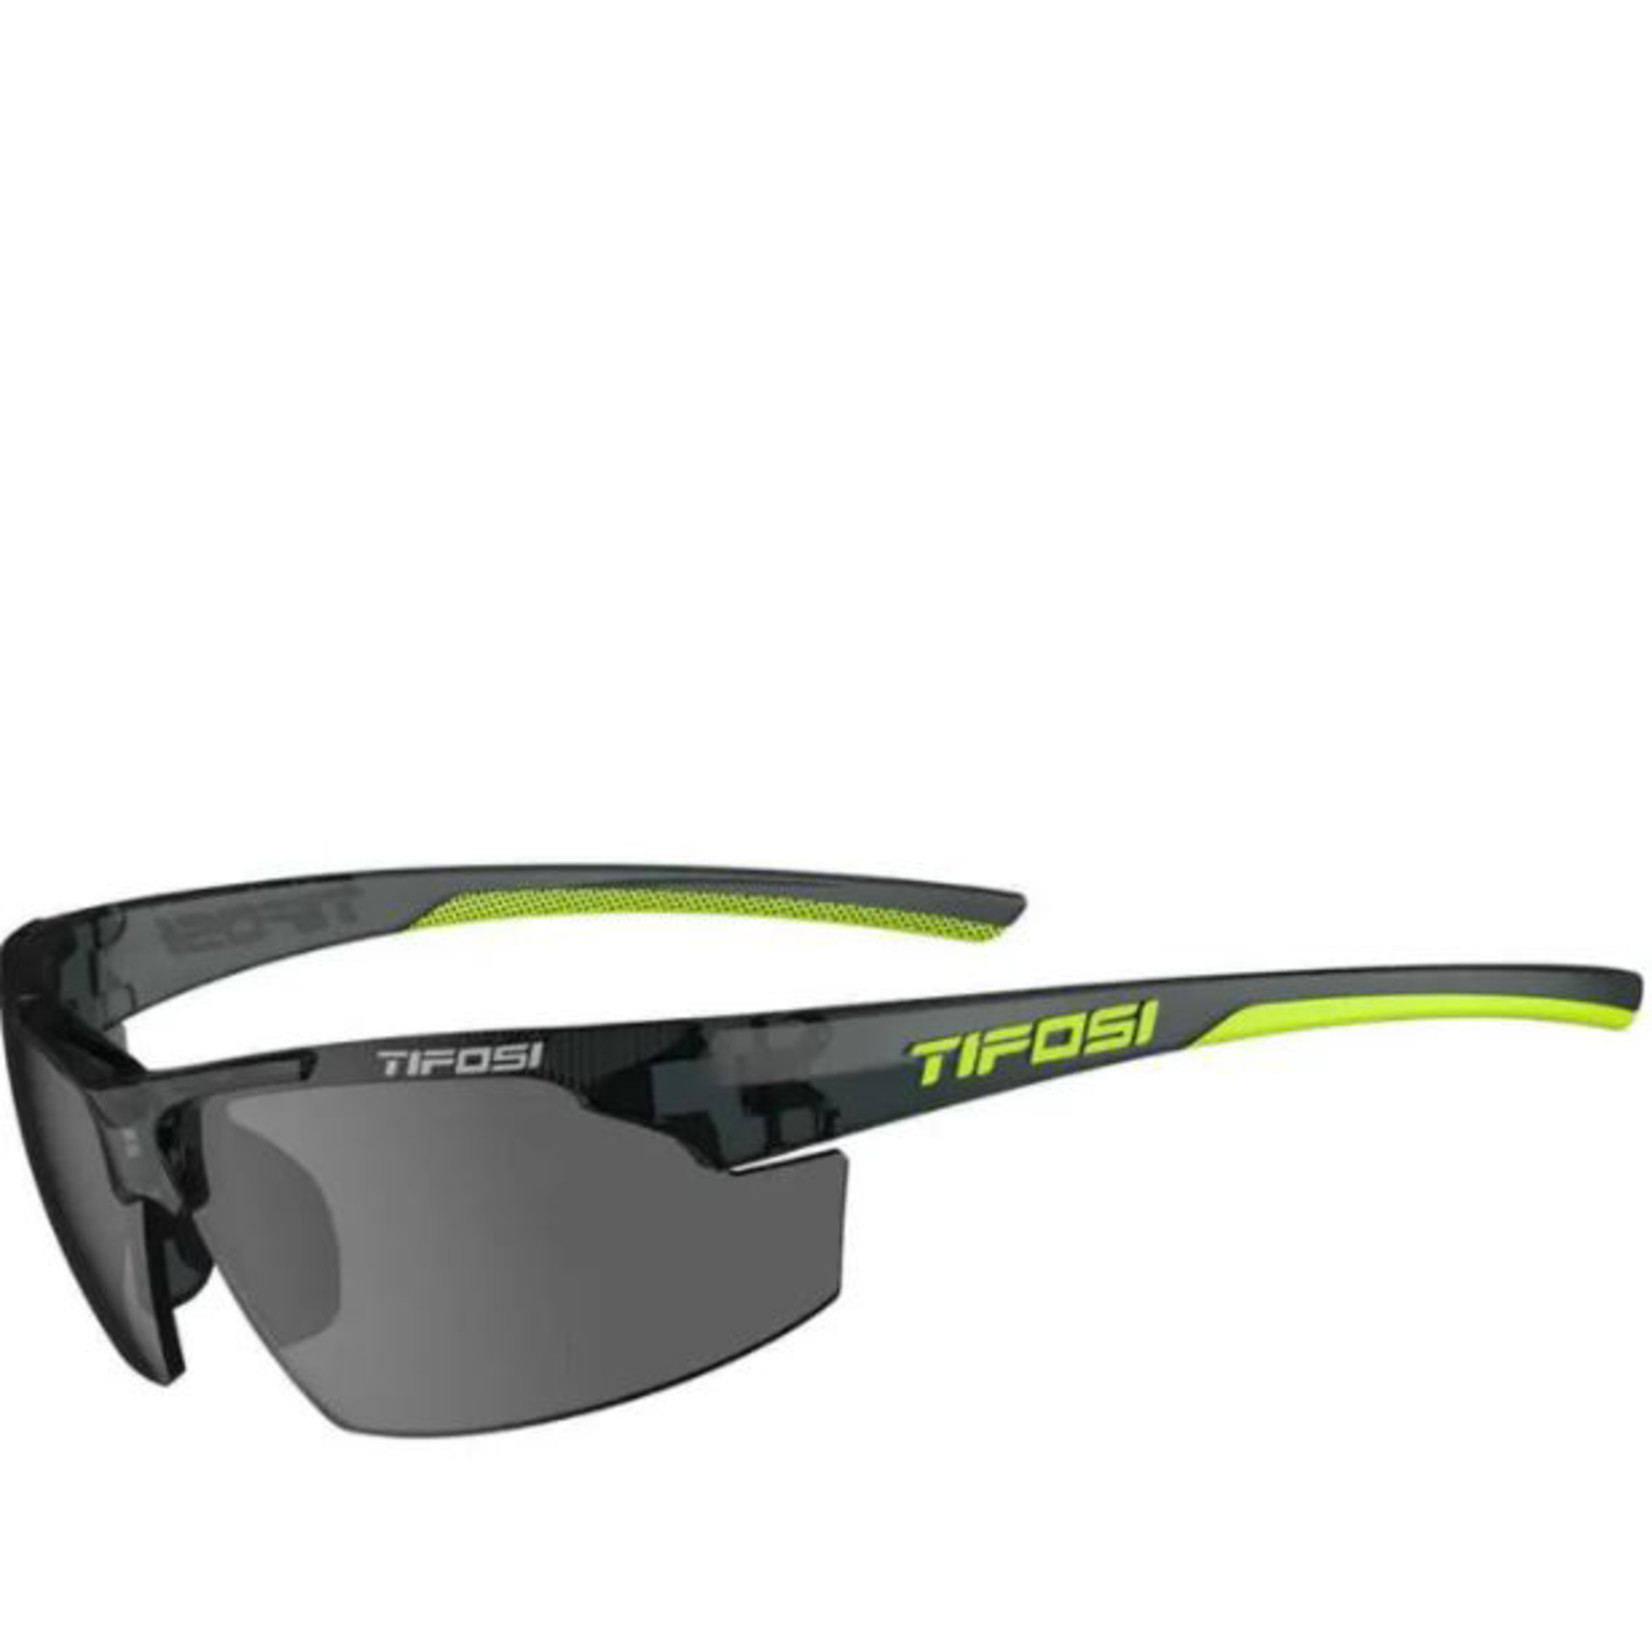 Tifosi Cycling Sunglasses - Track - Crystal Smoke - St Kilda Cycles